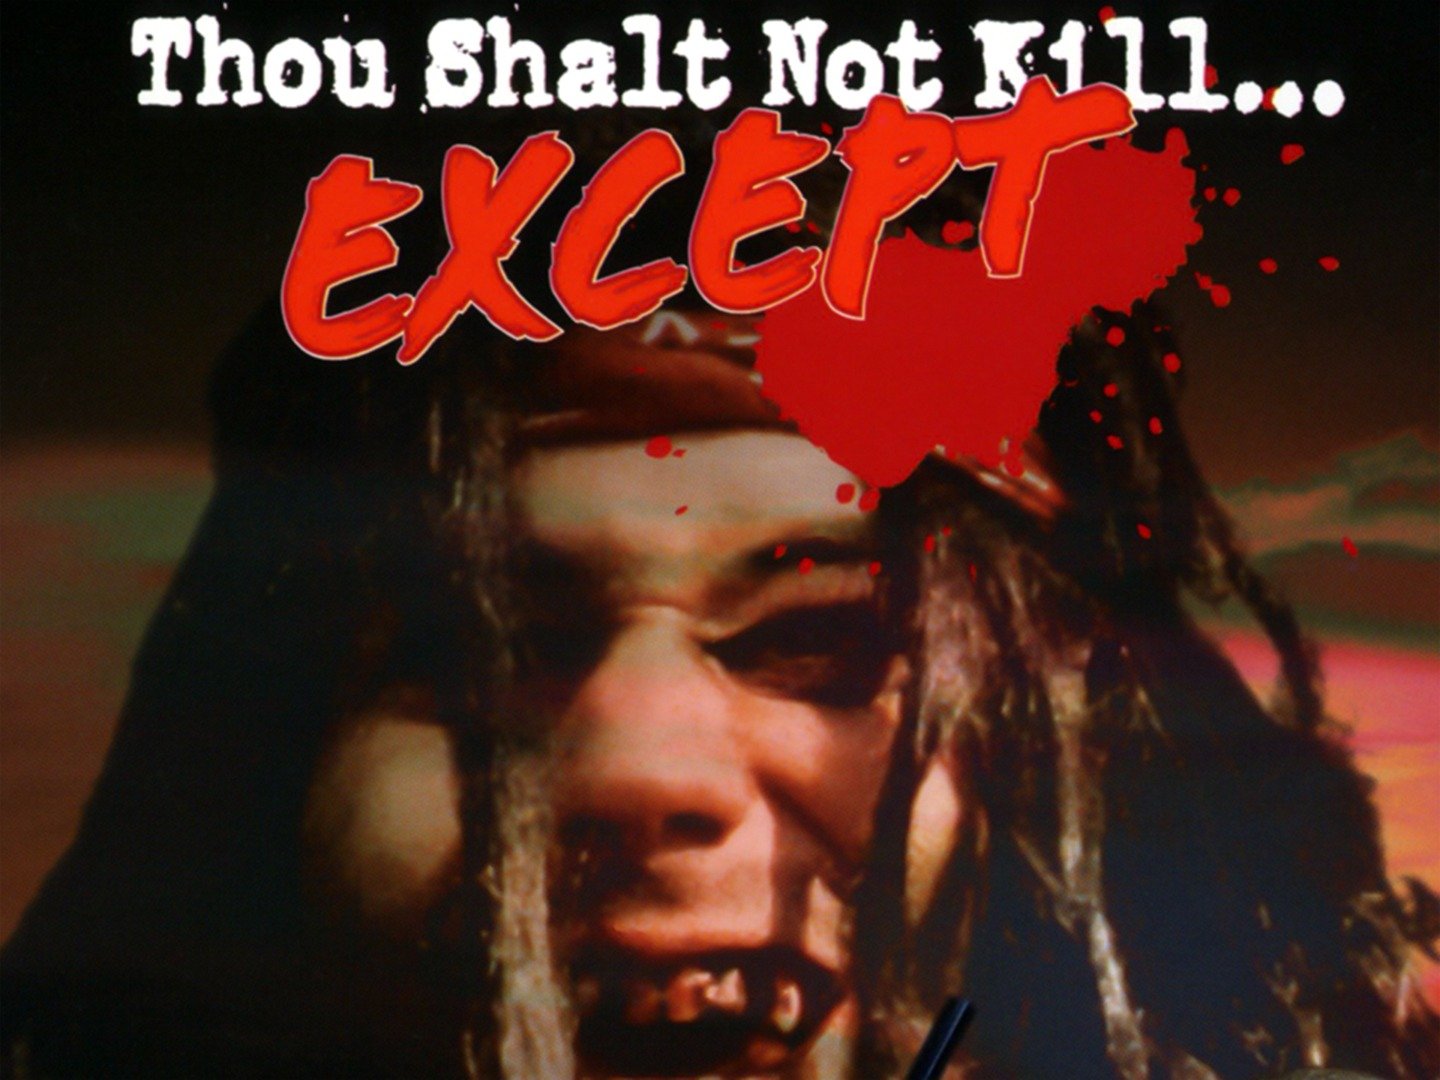 thou shalt not kill